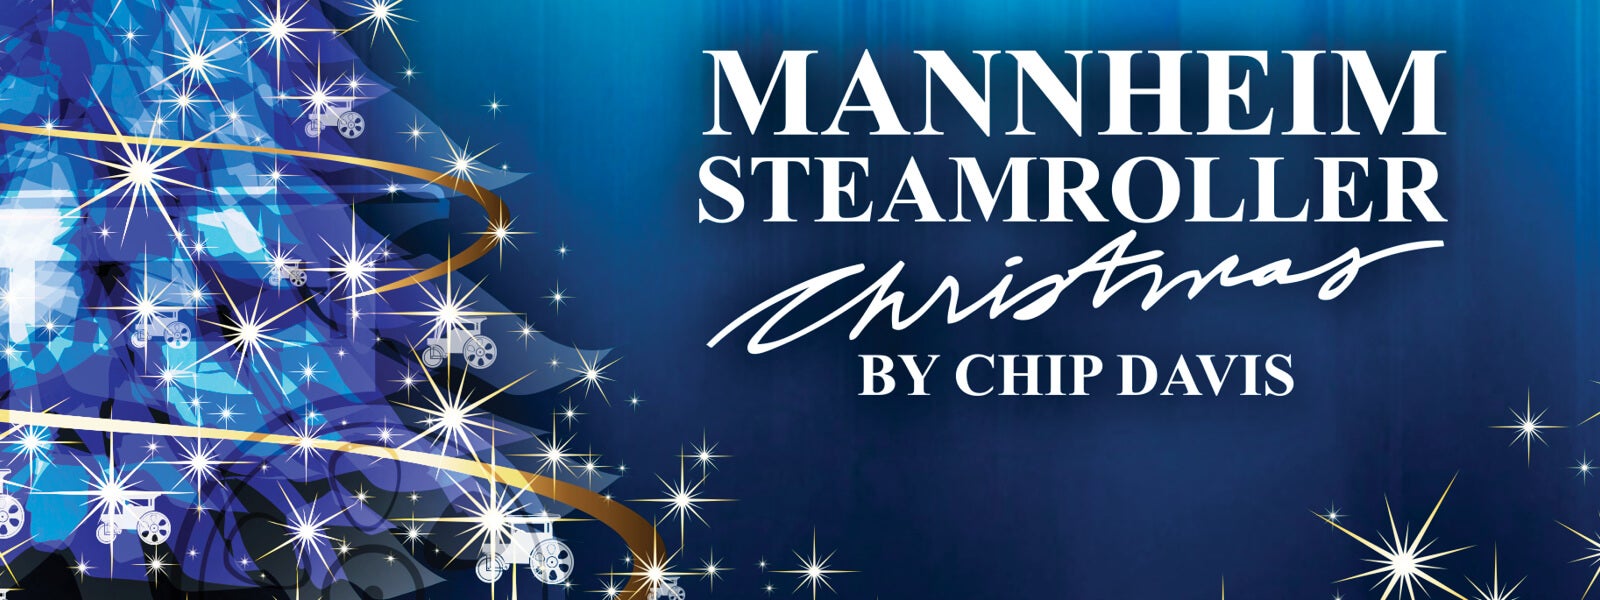 Mannheim Steamroller Christmas Blumenthal Performing Arts